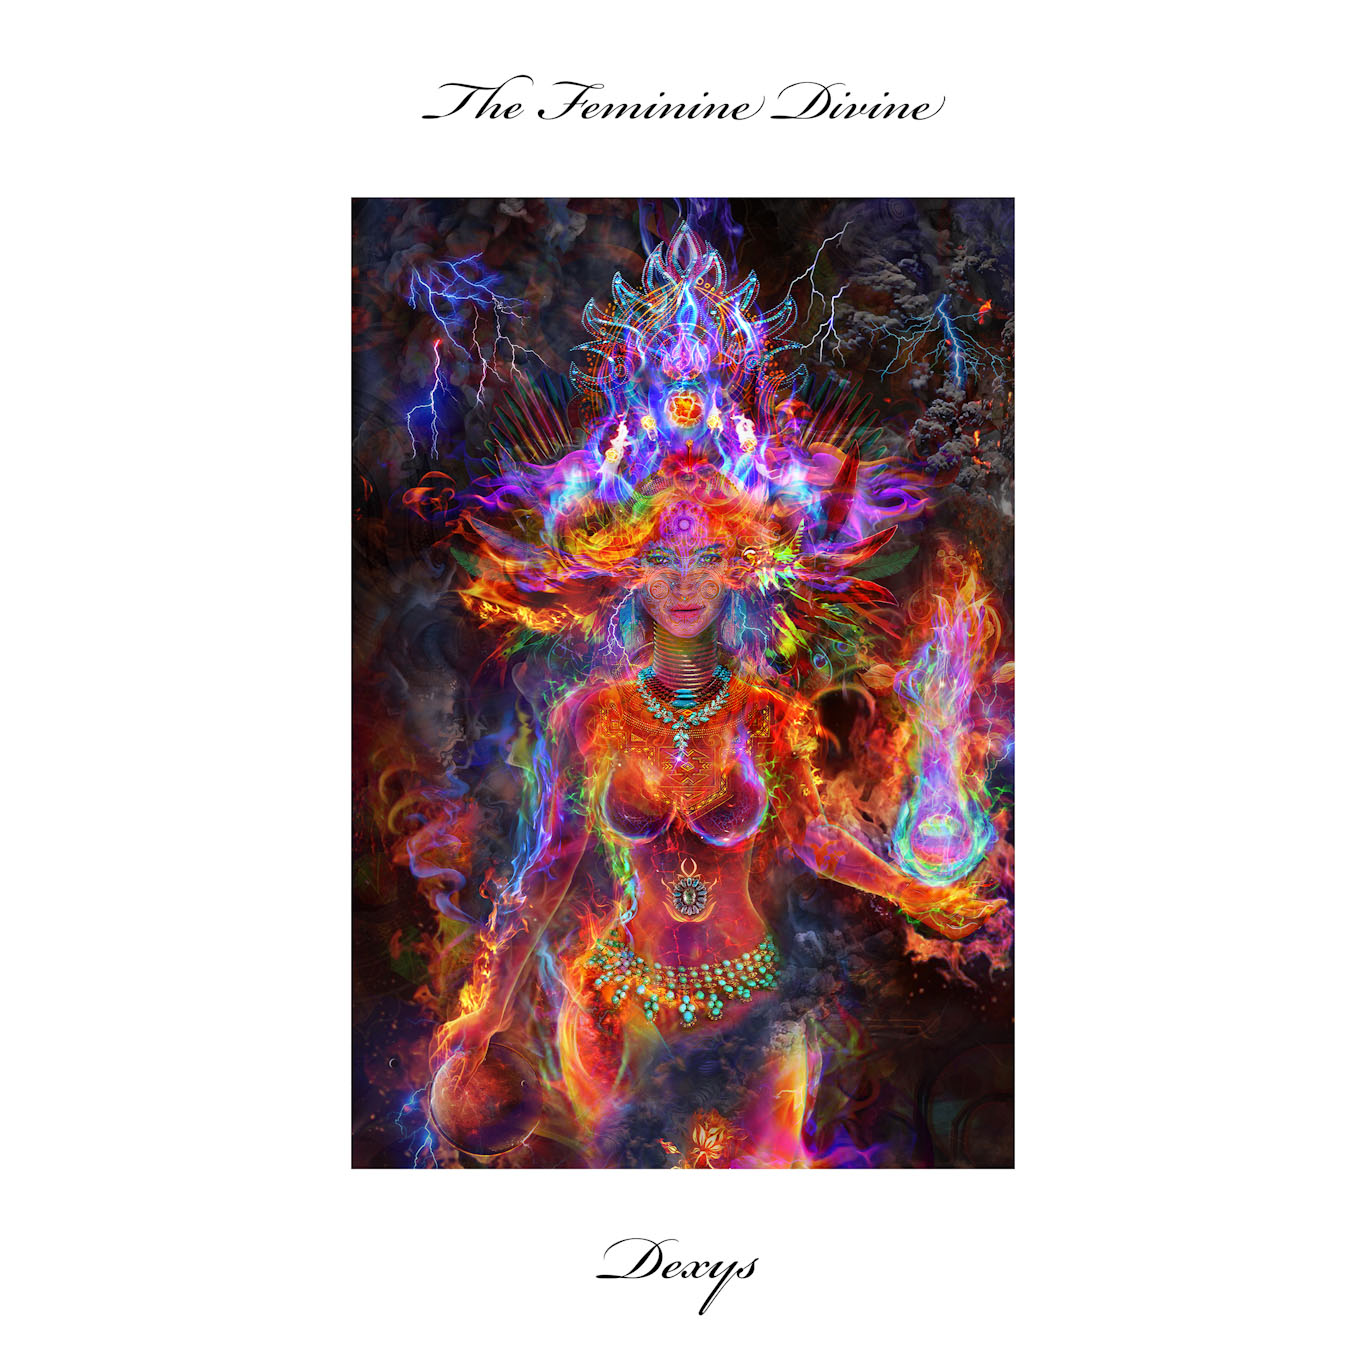 ALBUM REVIEW: Dexys – The Feminine Divine